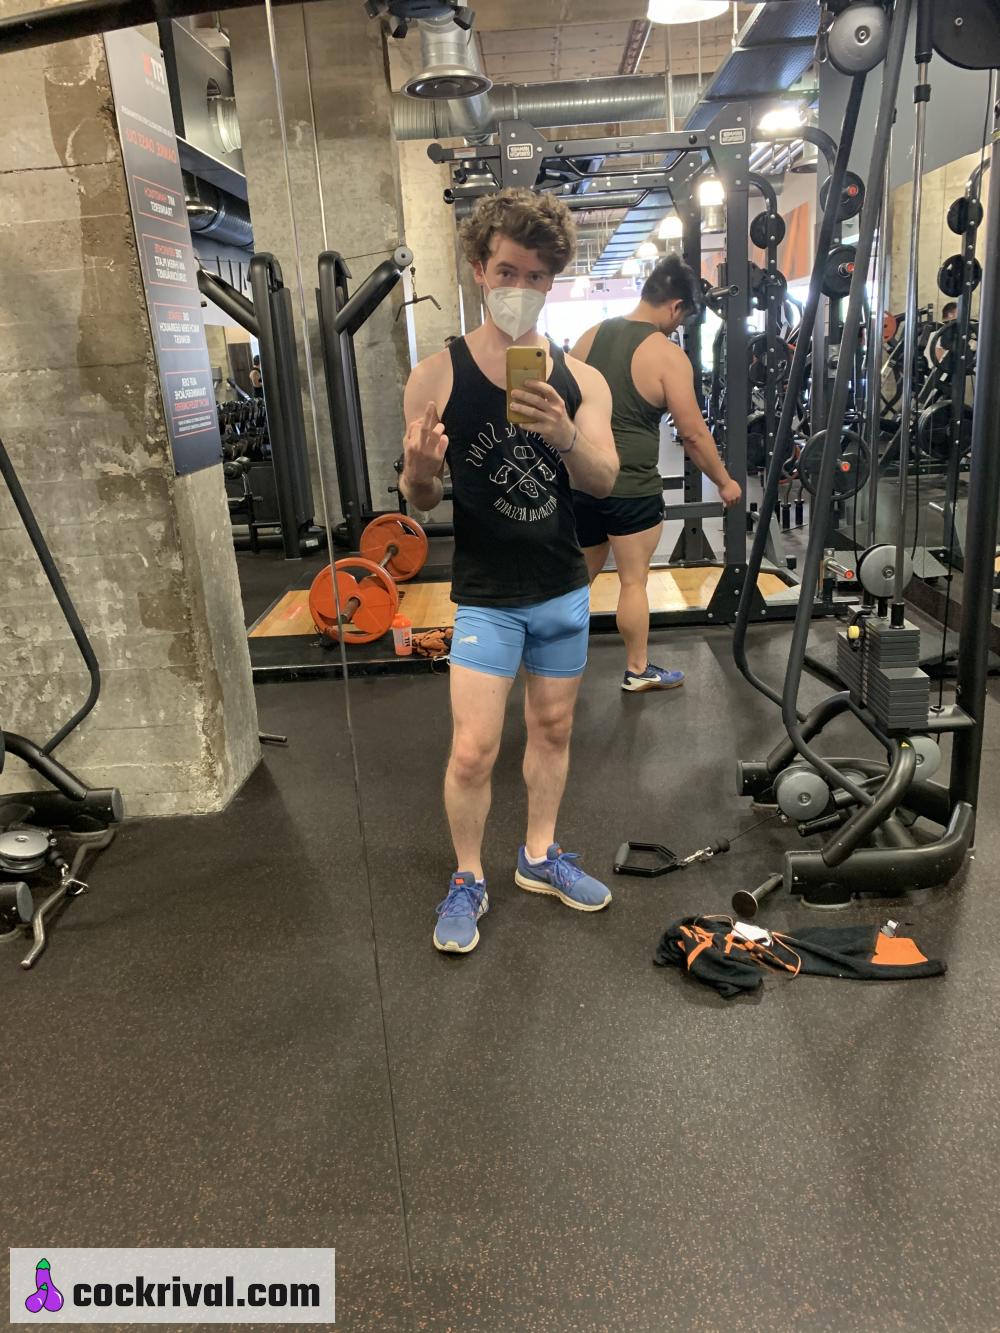 Blue gym shorts